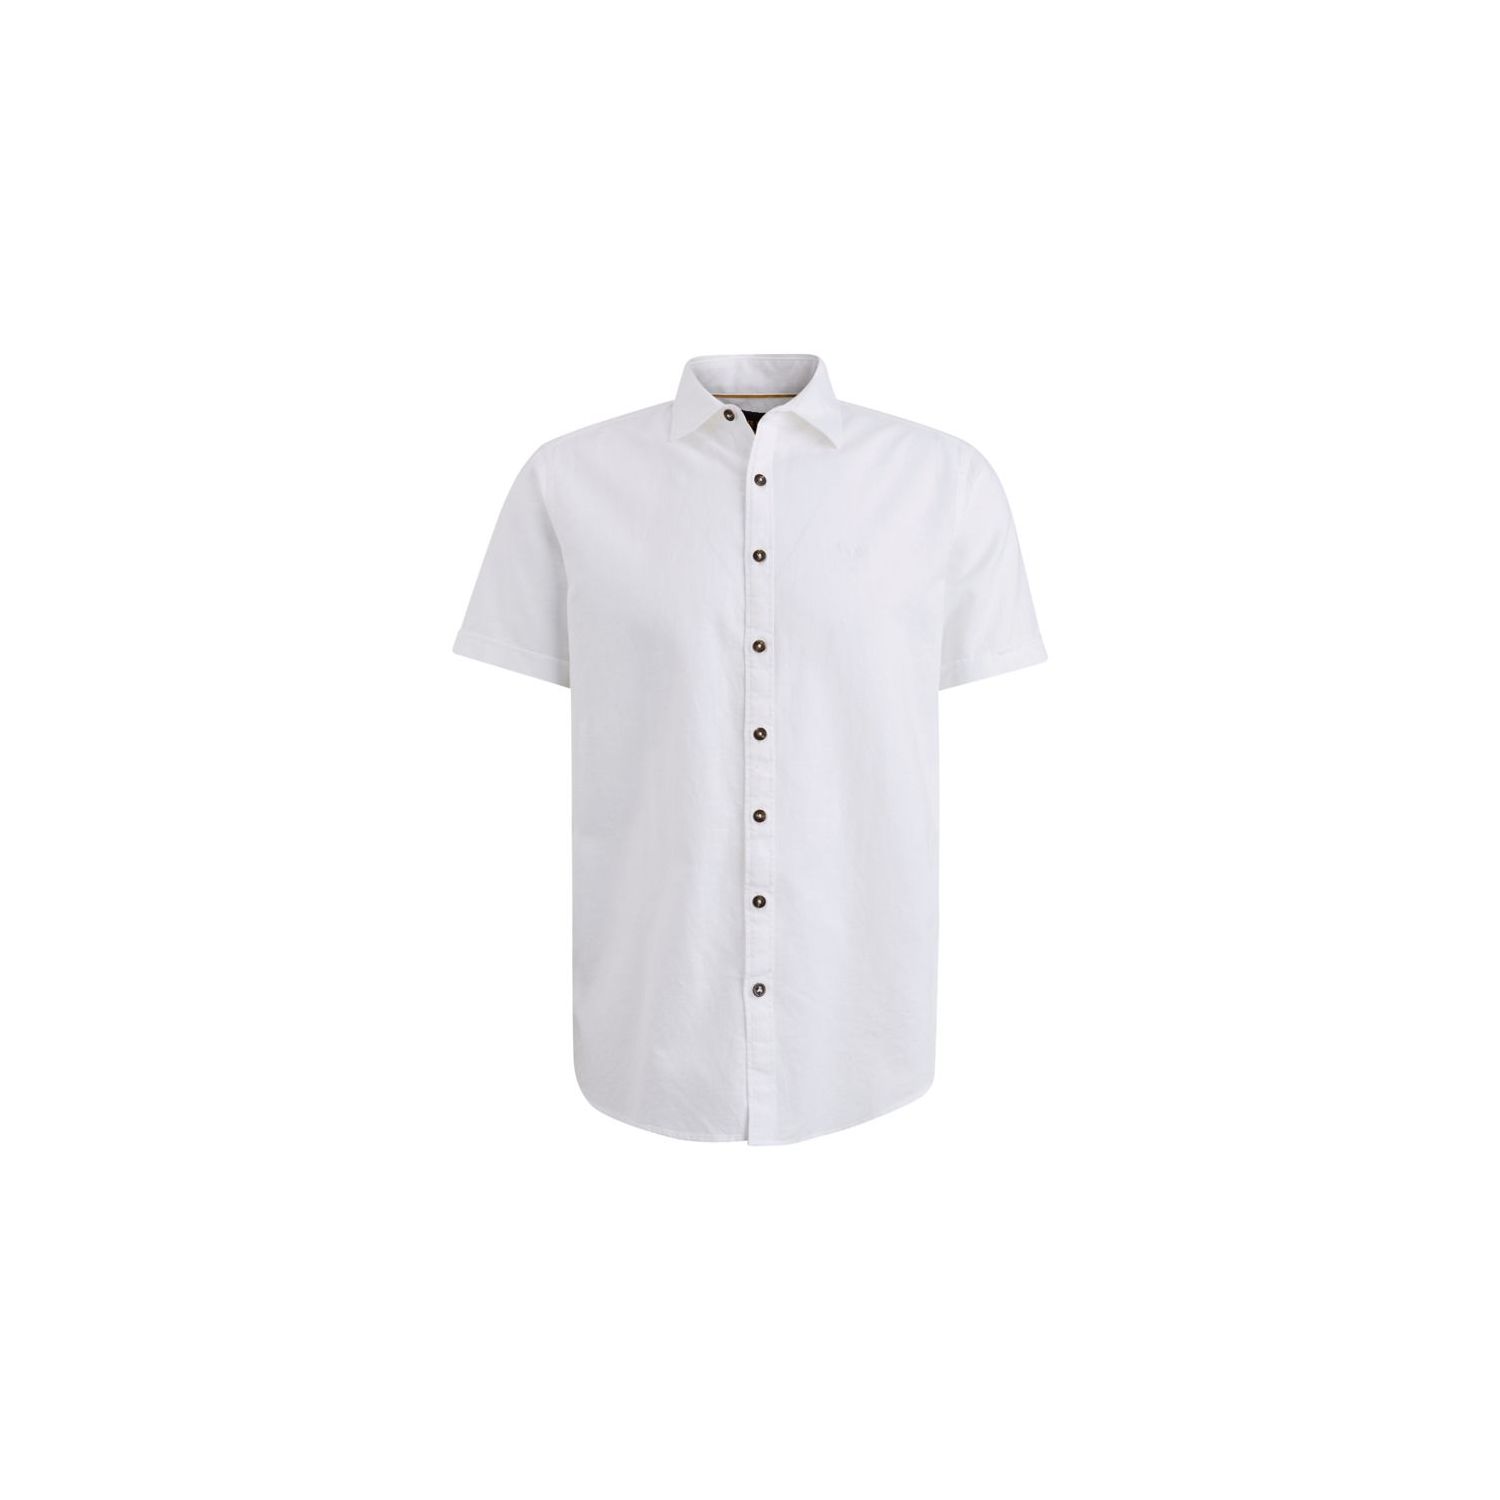 PME Legend short sleeve shirt linen 2tone b.white